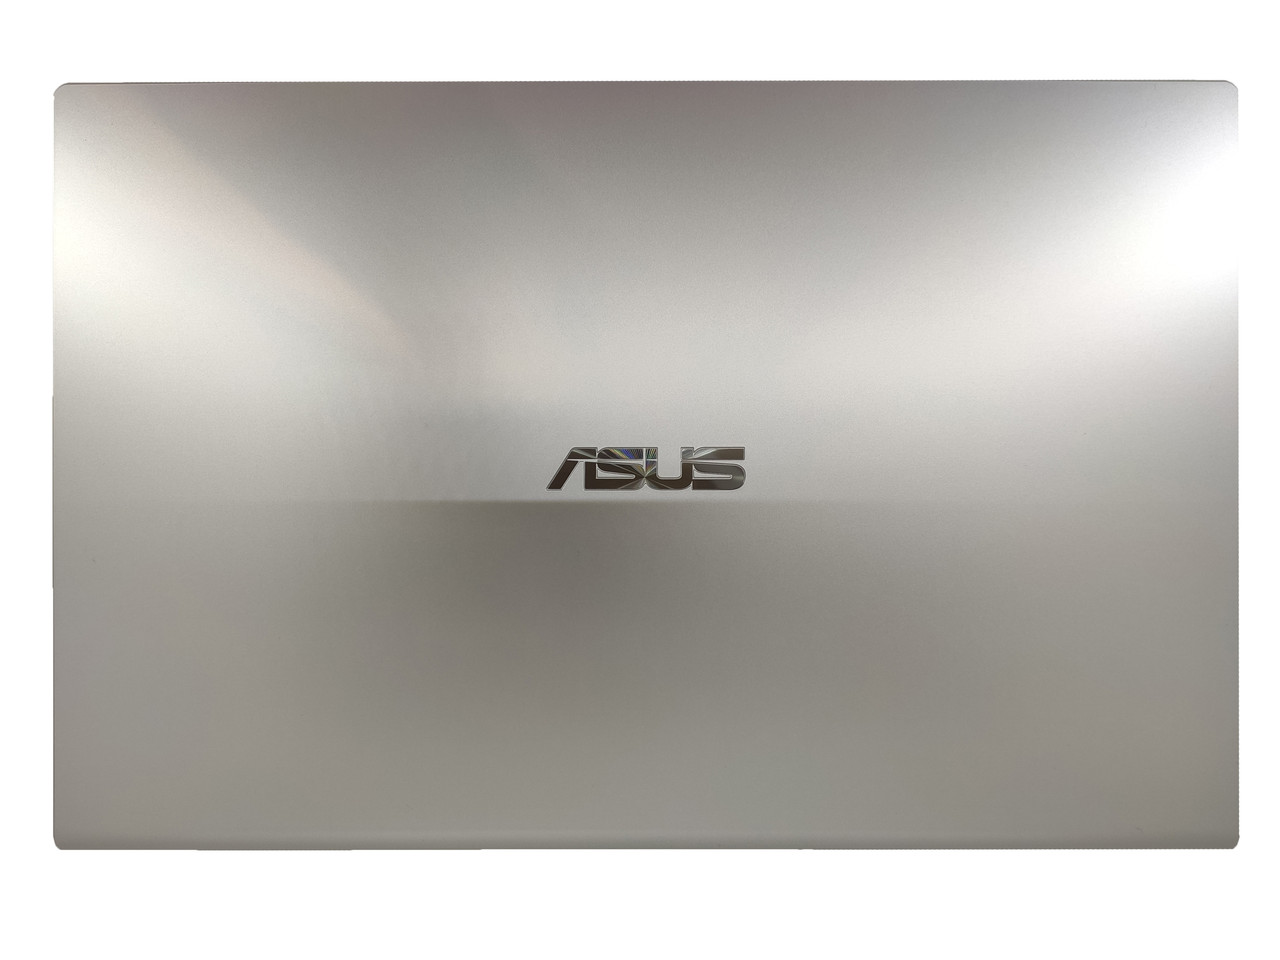 Крышка матрицы Asus X509, серебристая